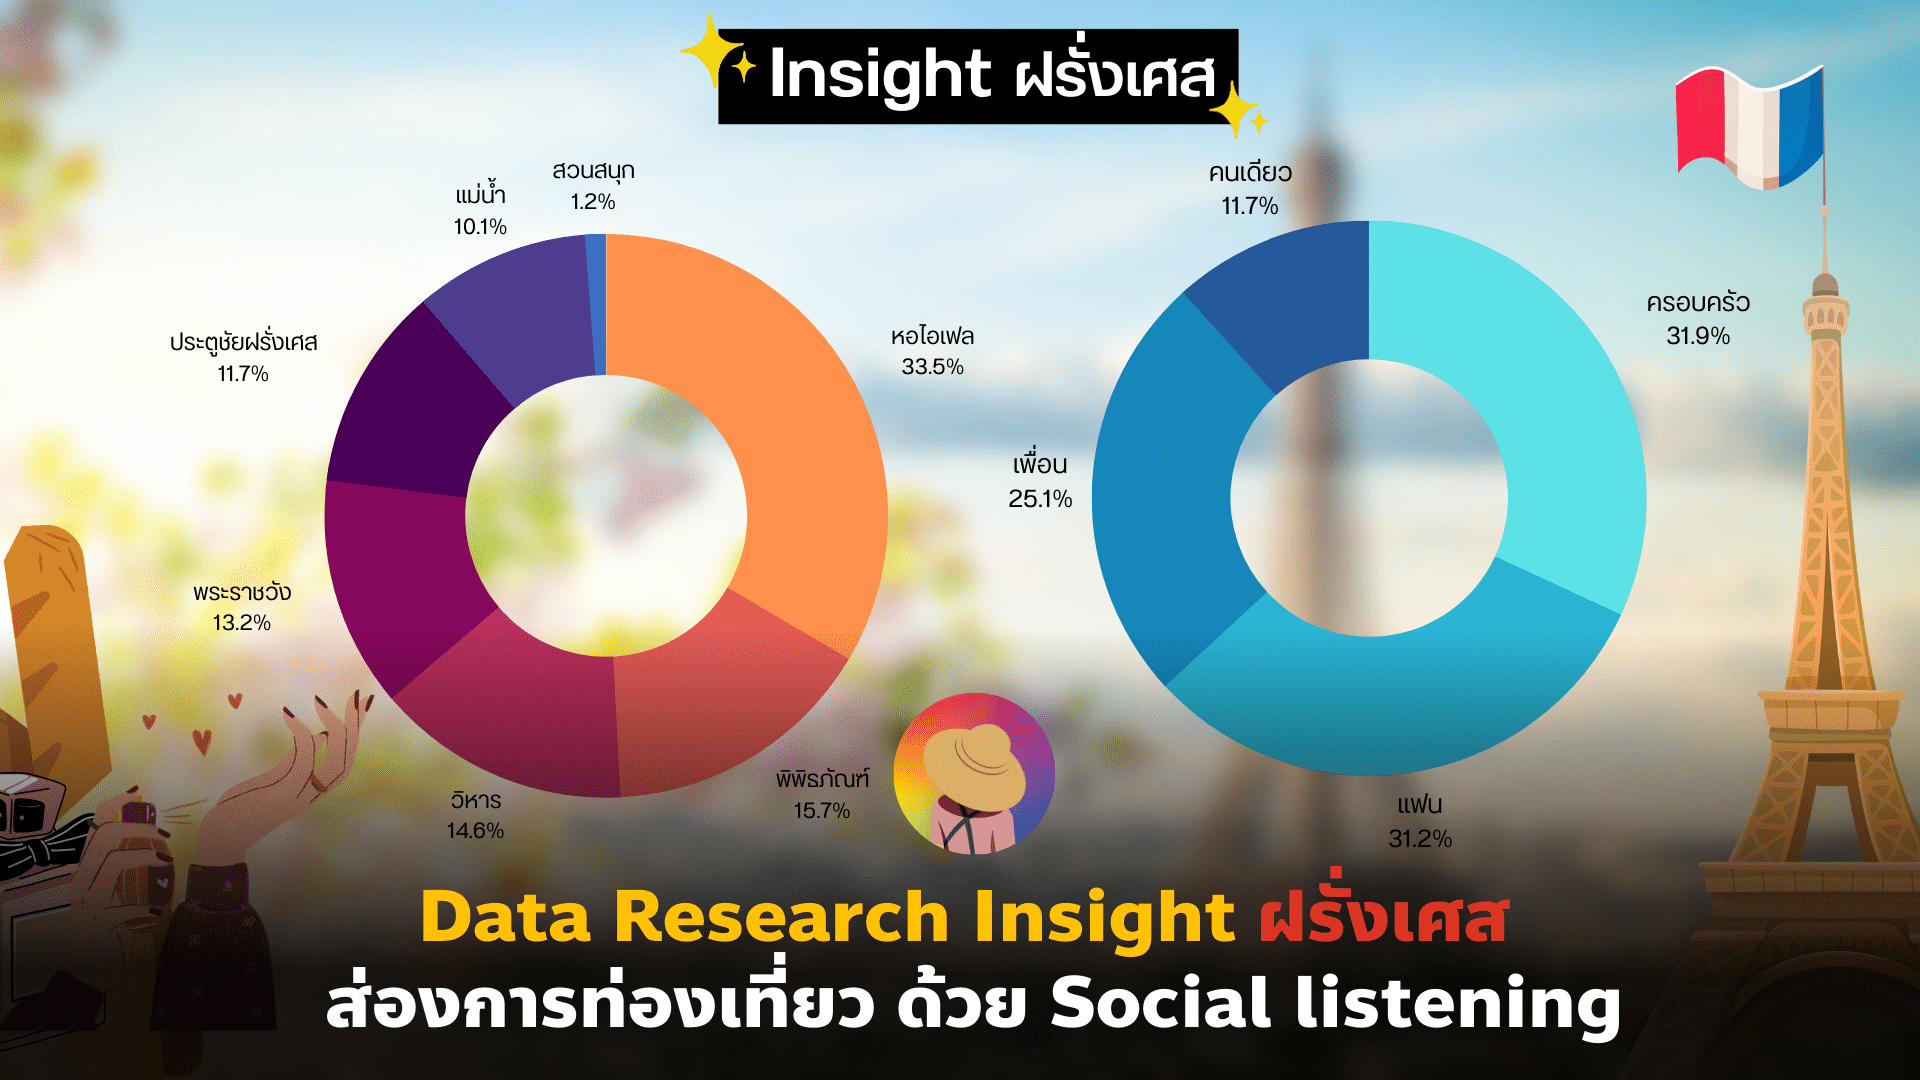 Data Research Insight ฝรั่งเศส ส่องการท่องเที่ยว ด้วย Social listening